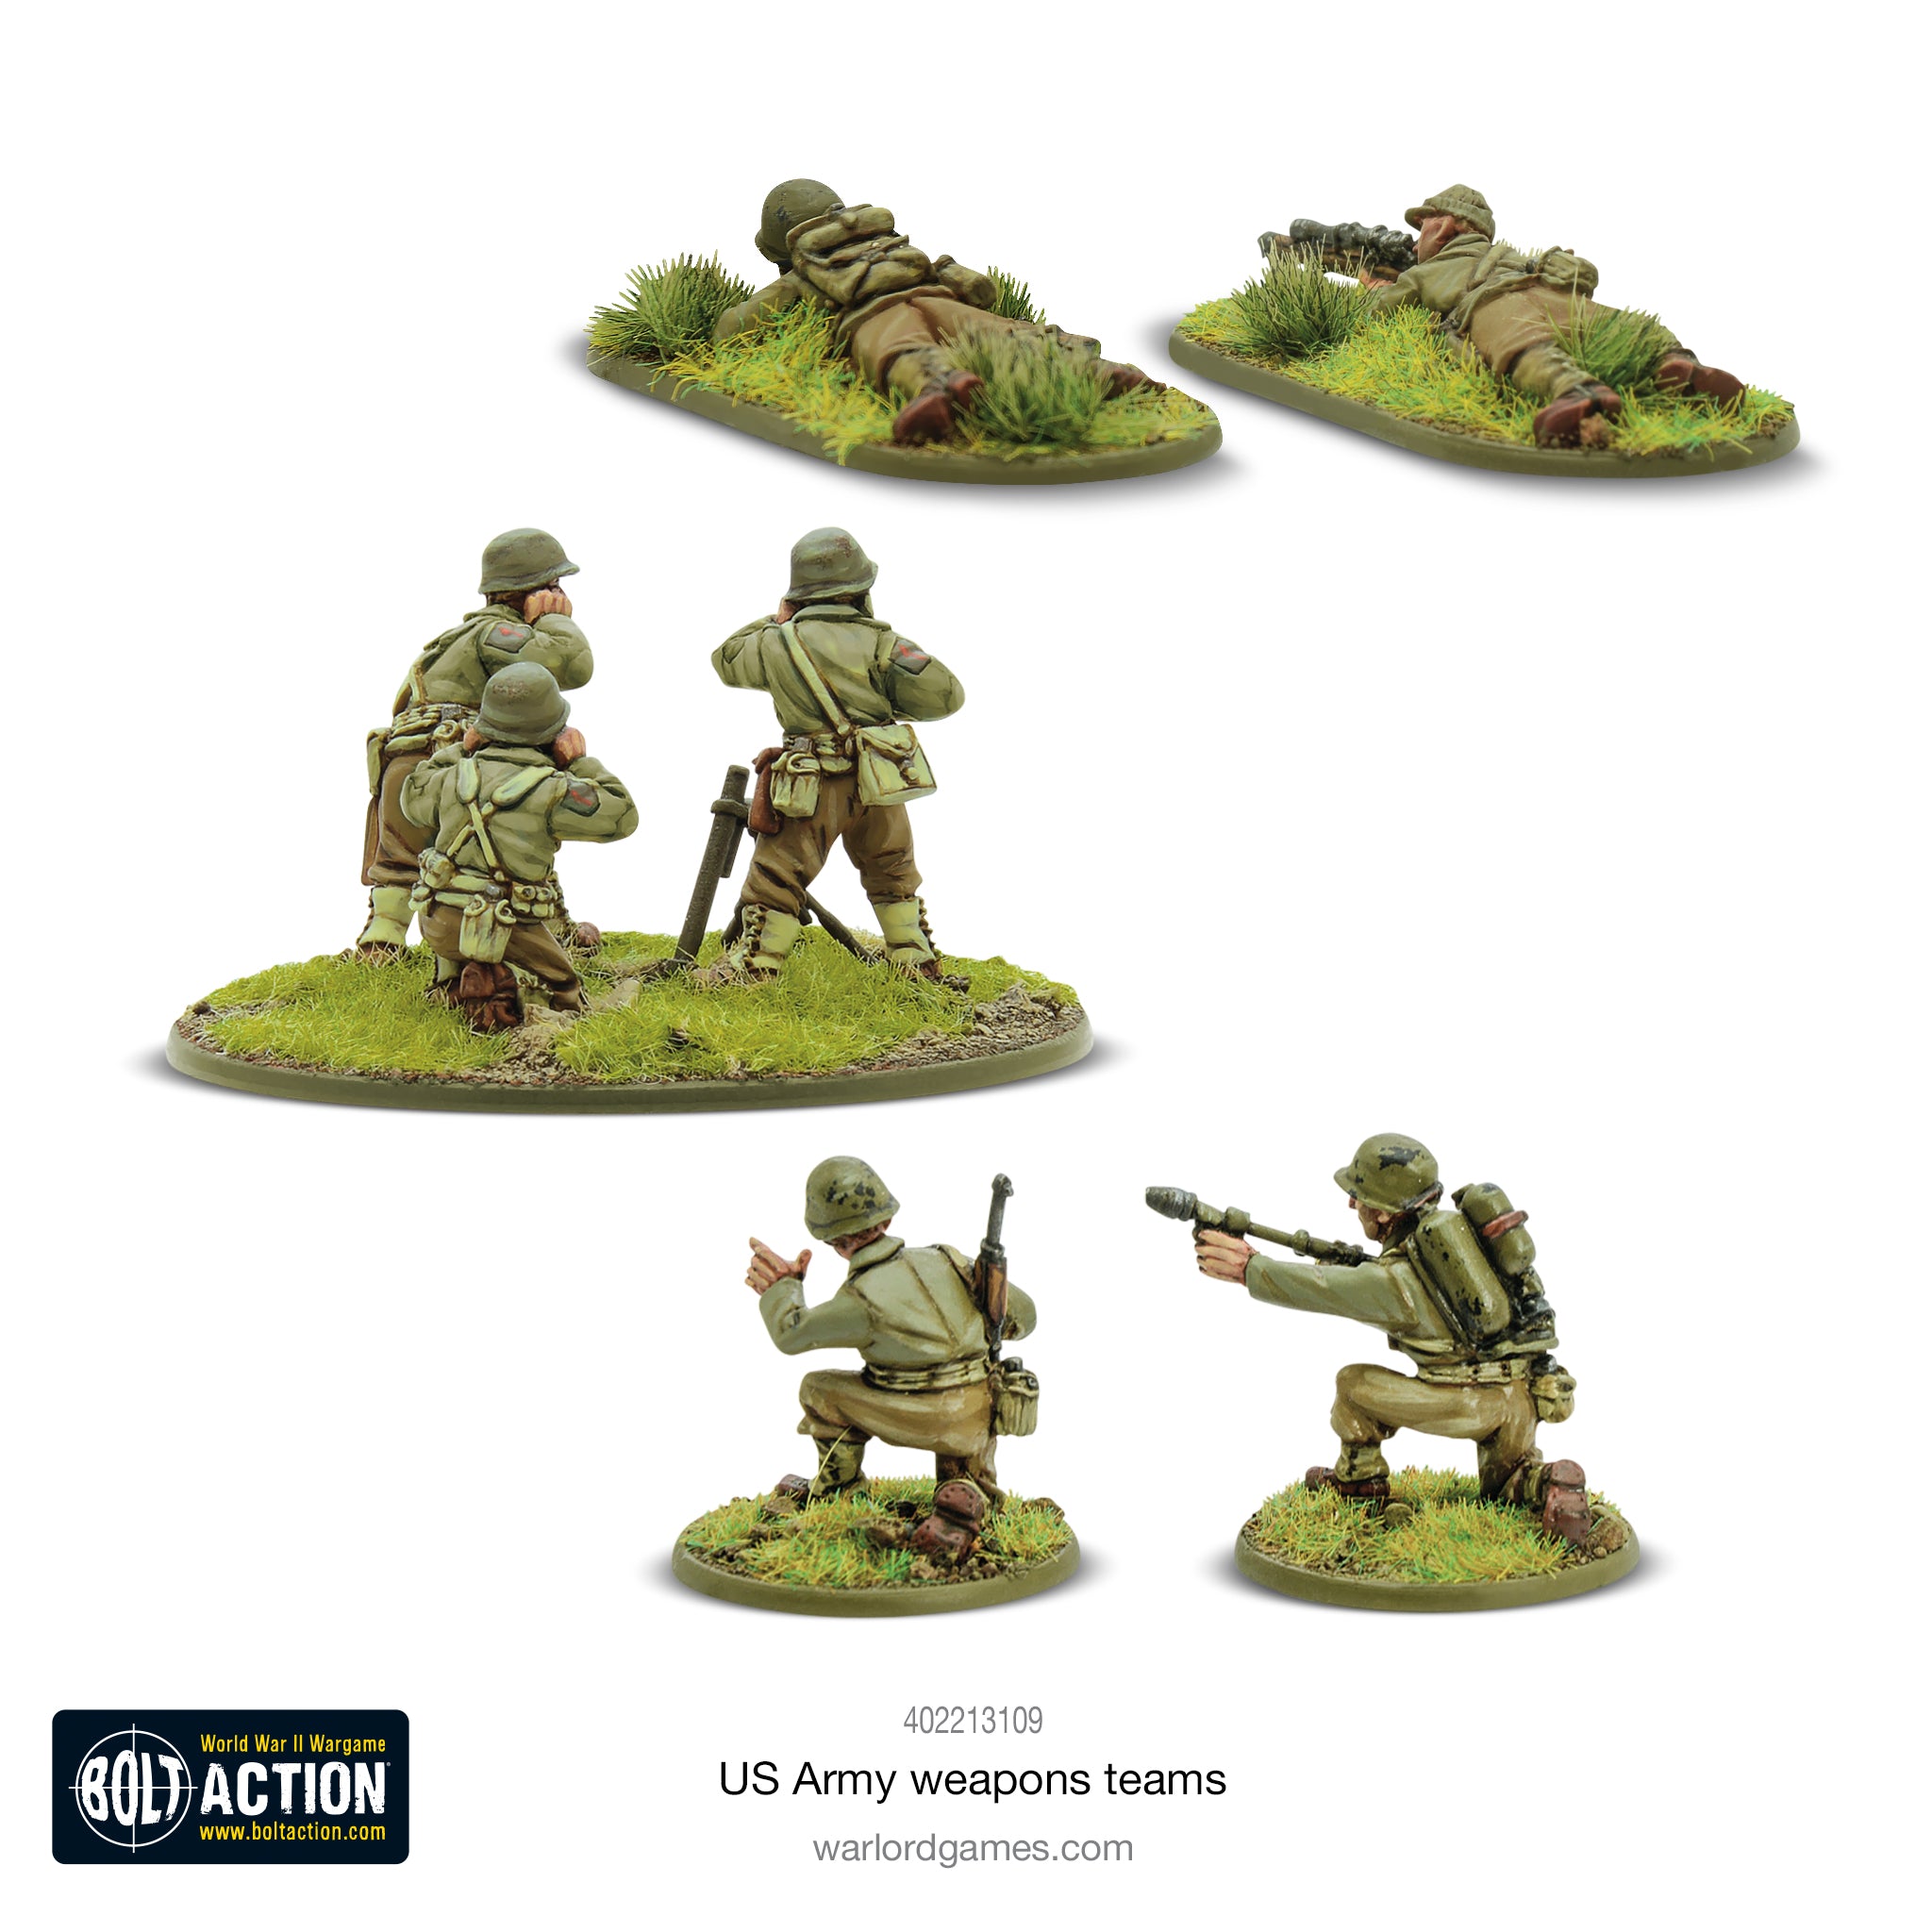 US Army Weapons teams (6) - 402213109